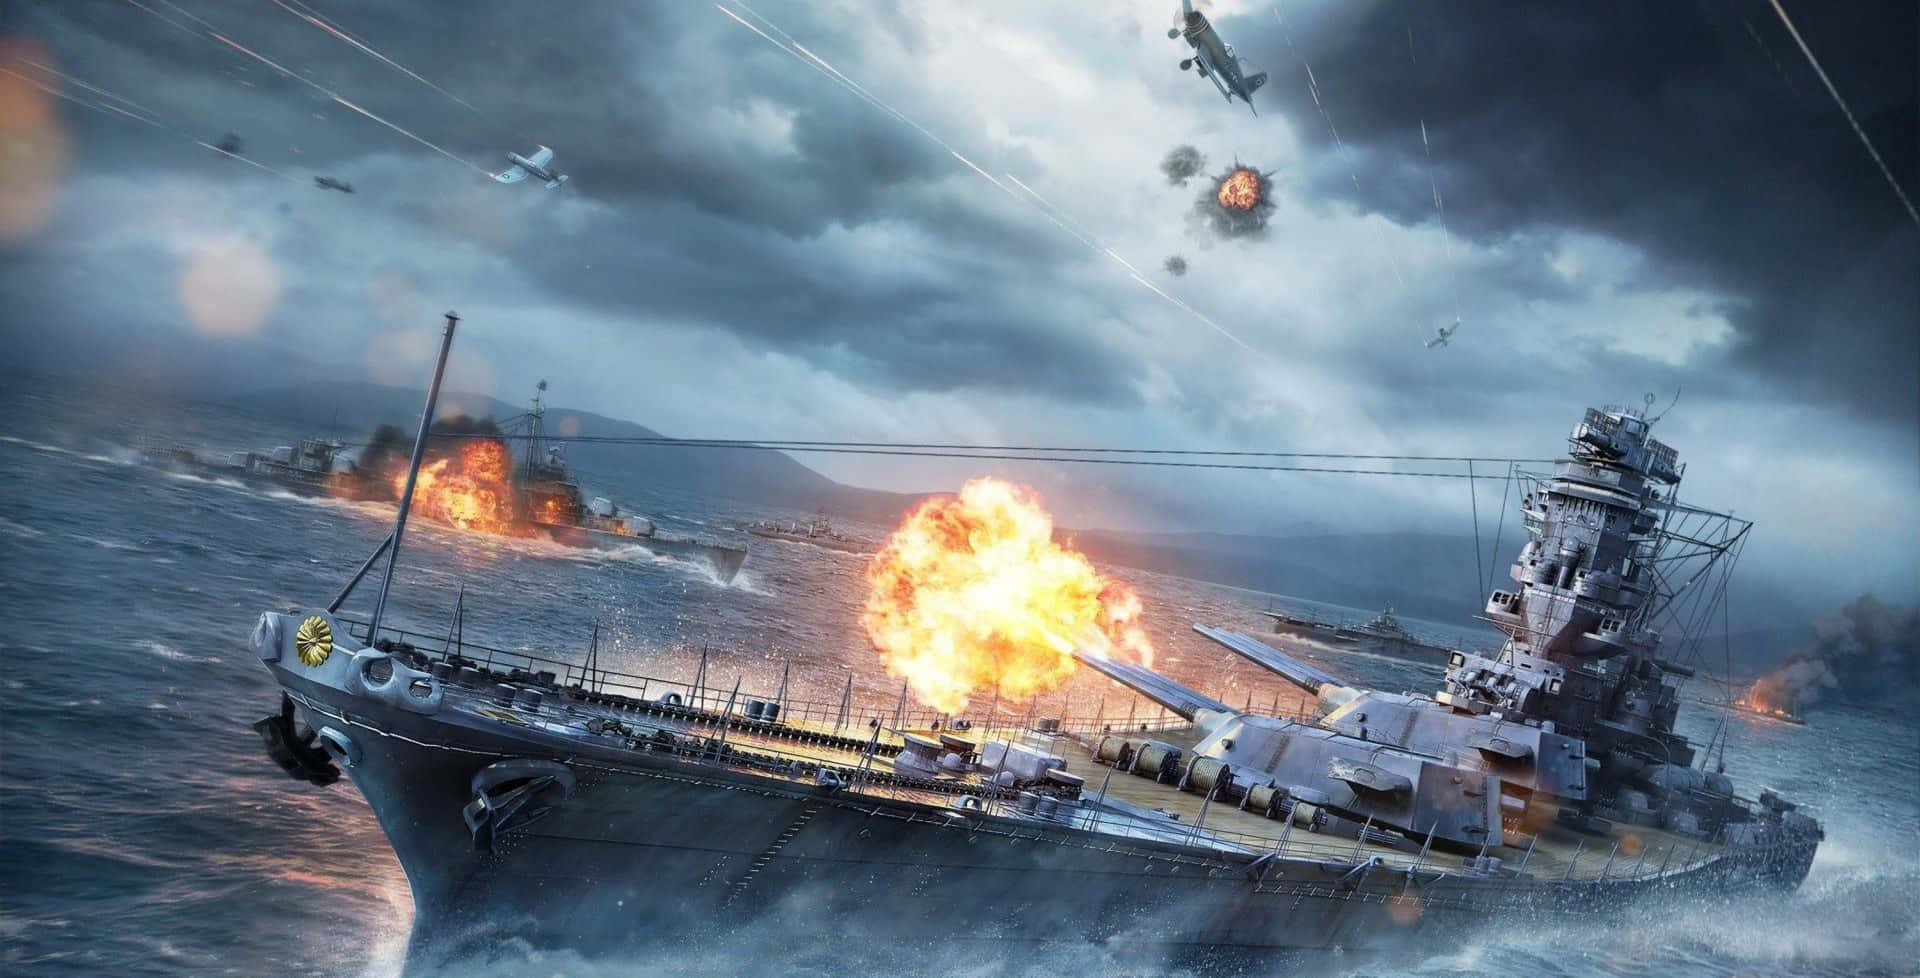 Naval_ Battle_ Artwork Wallpaper